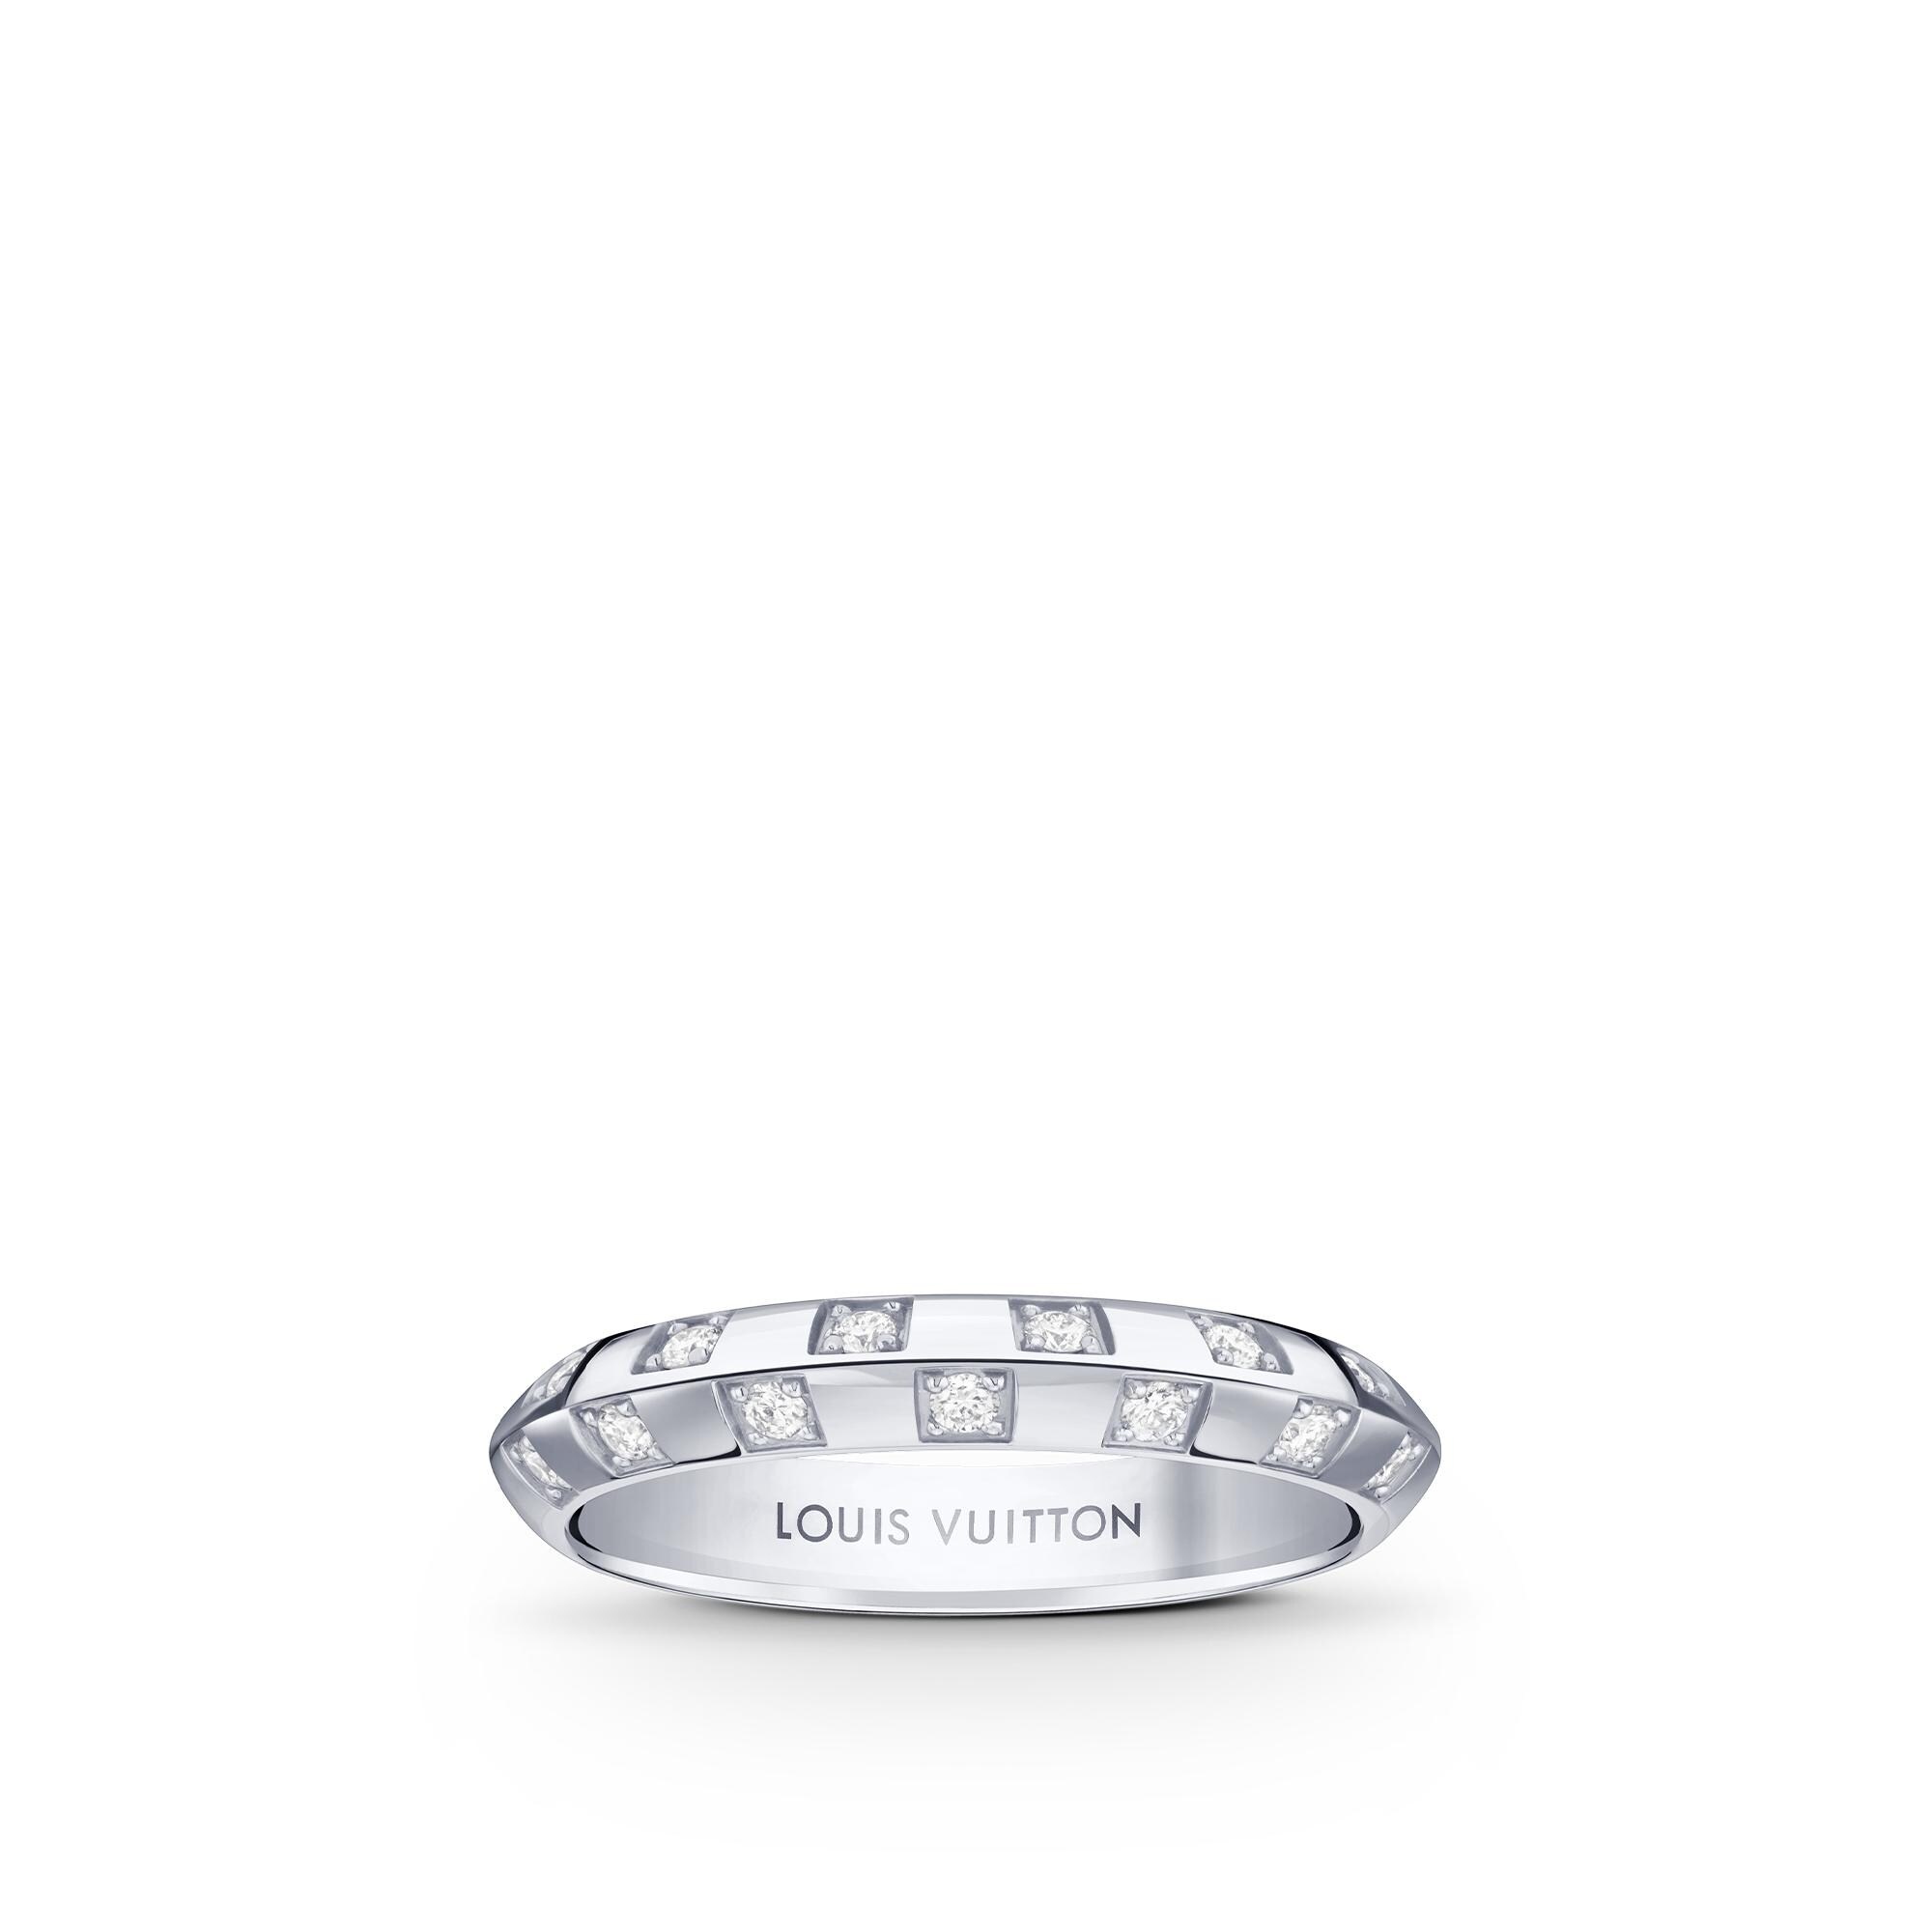 Louis Vuitton Damier Ring, White Gold and diamonds